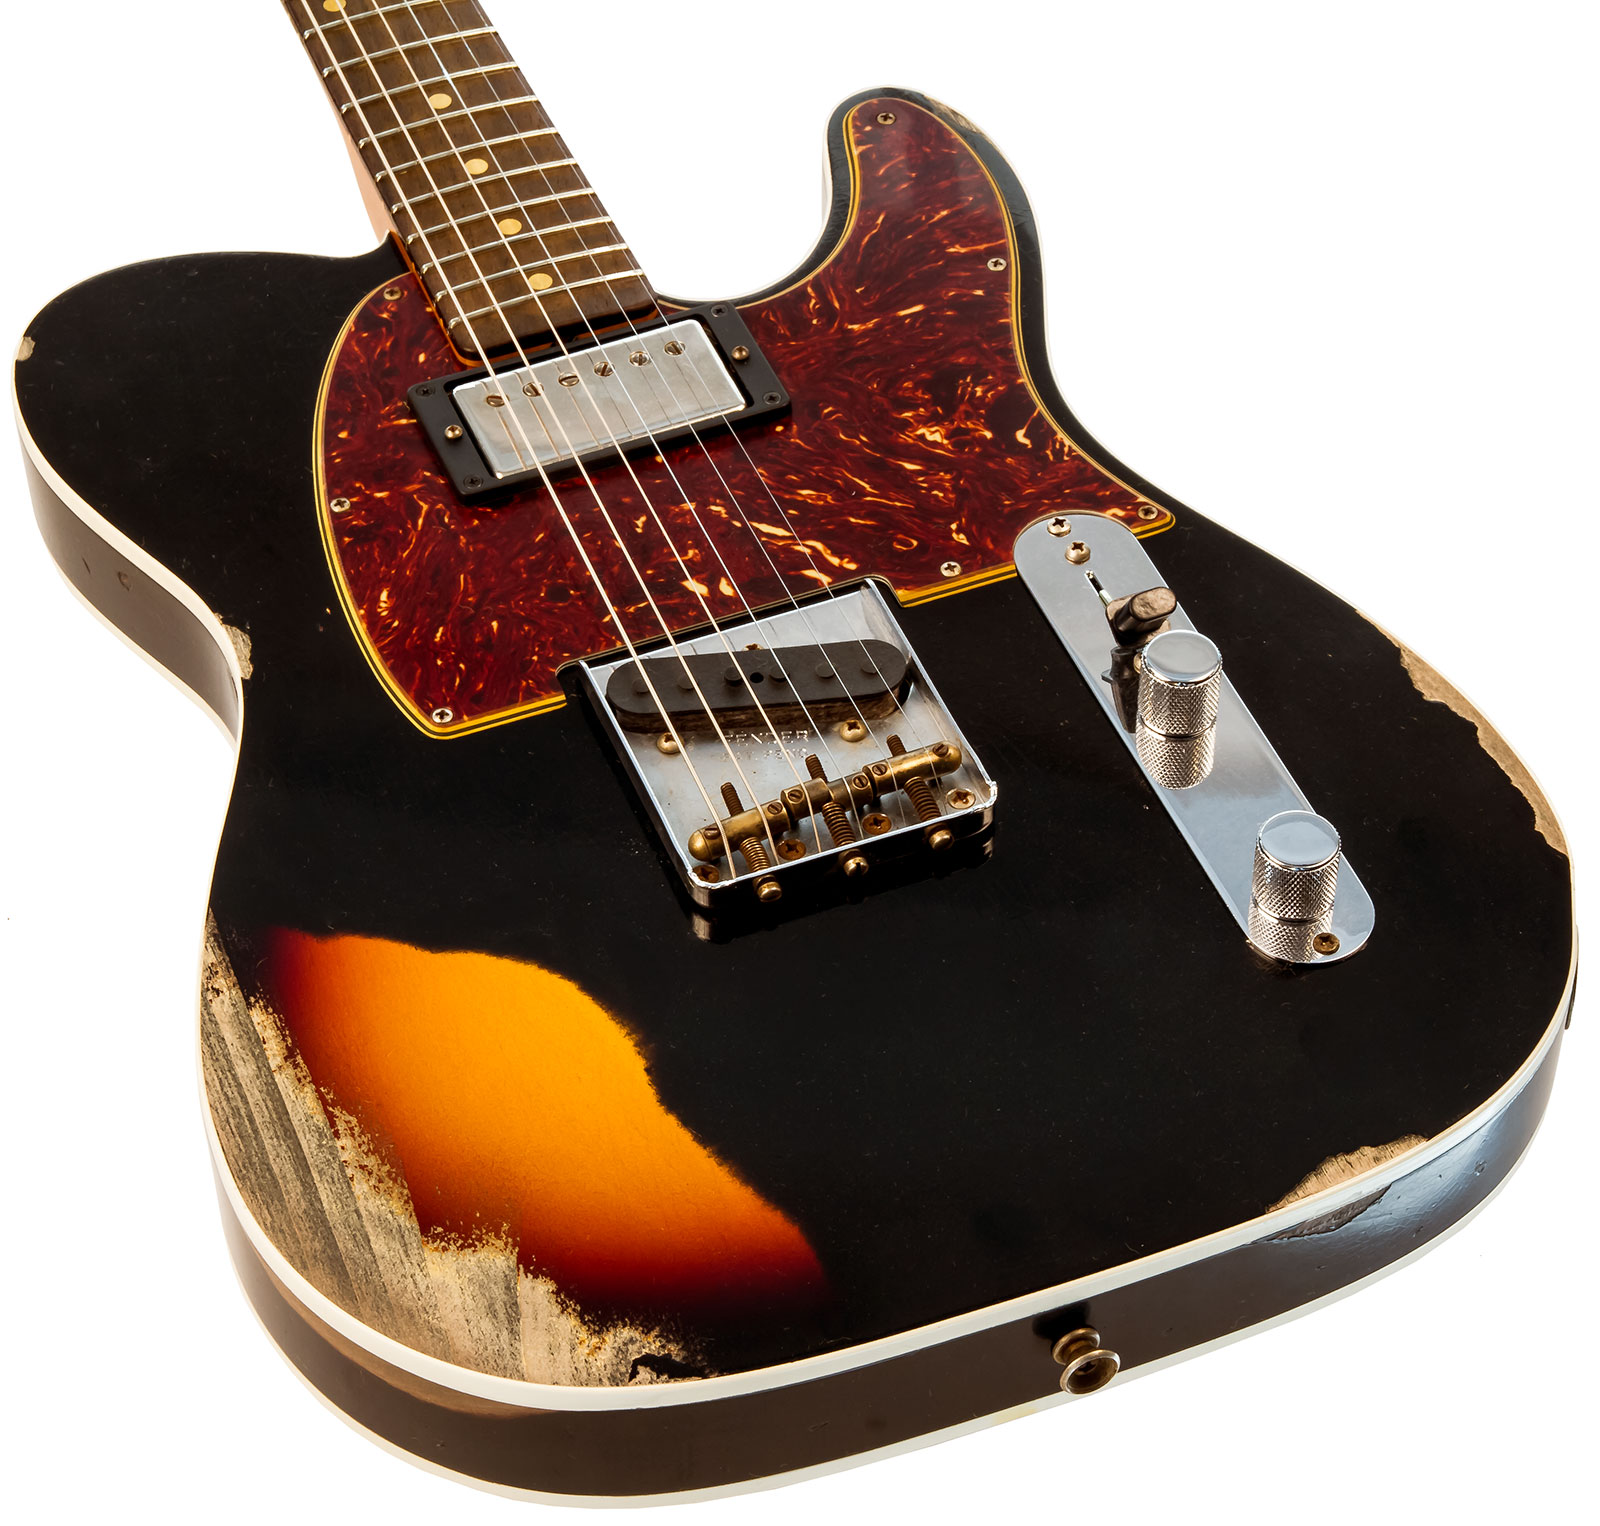 Fender Custom Shop Tele Custom 1960 Sh Ltd Hs Ht Rw #cz549784 - Heavy Relic Black Over 3-color Sunburst - Tel shape electric guitar - Variation 2